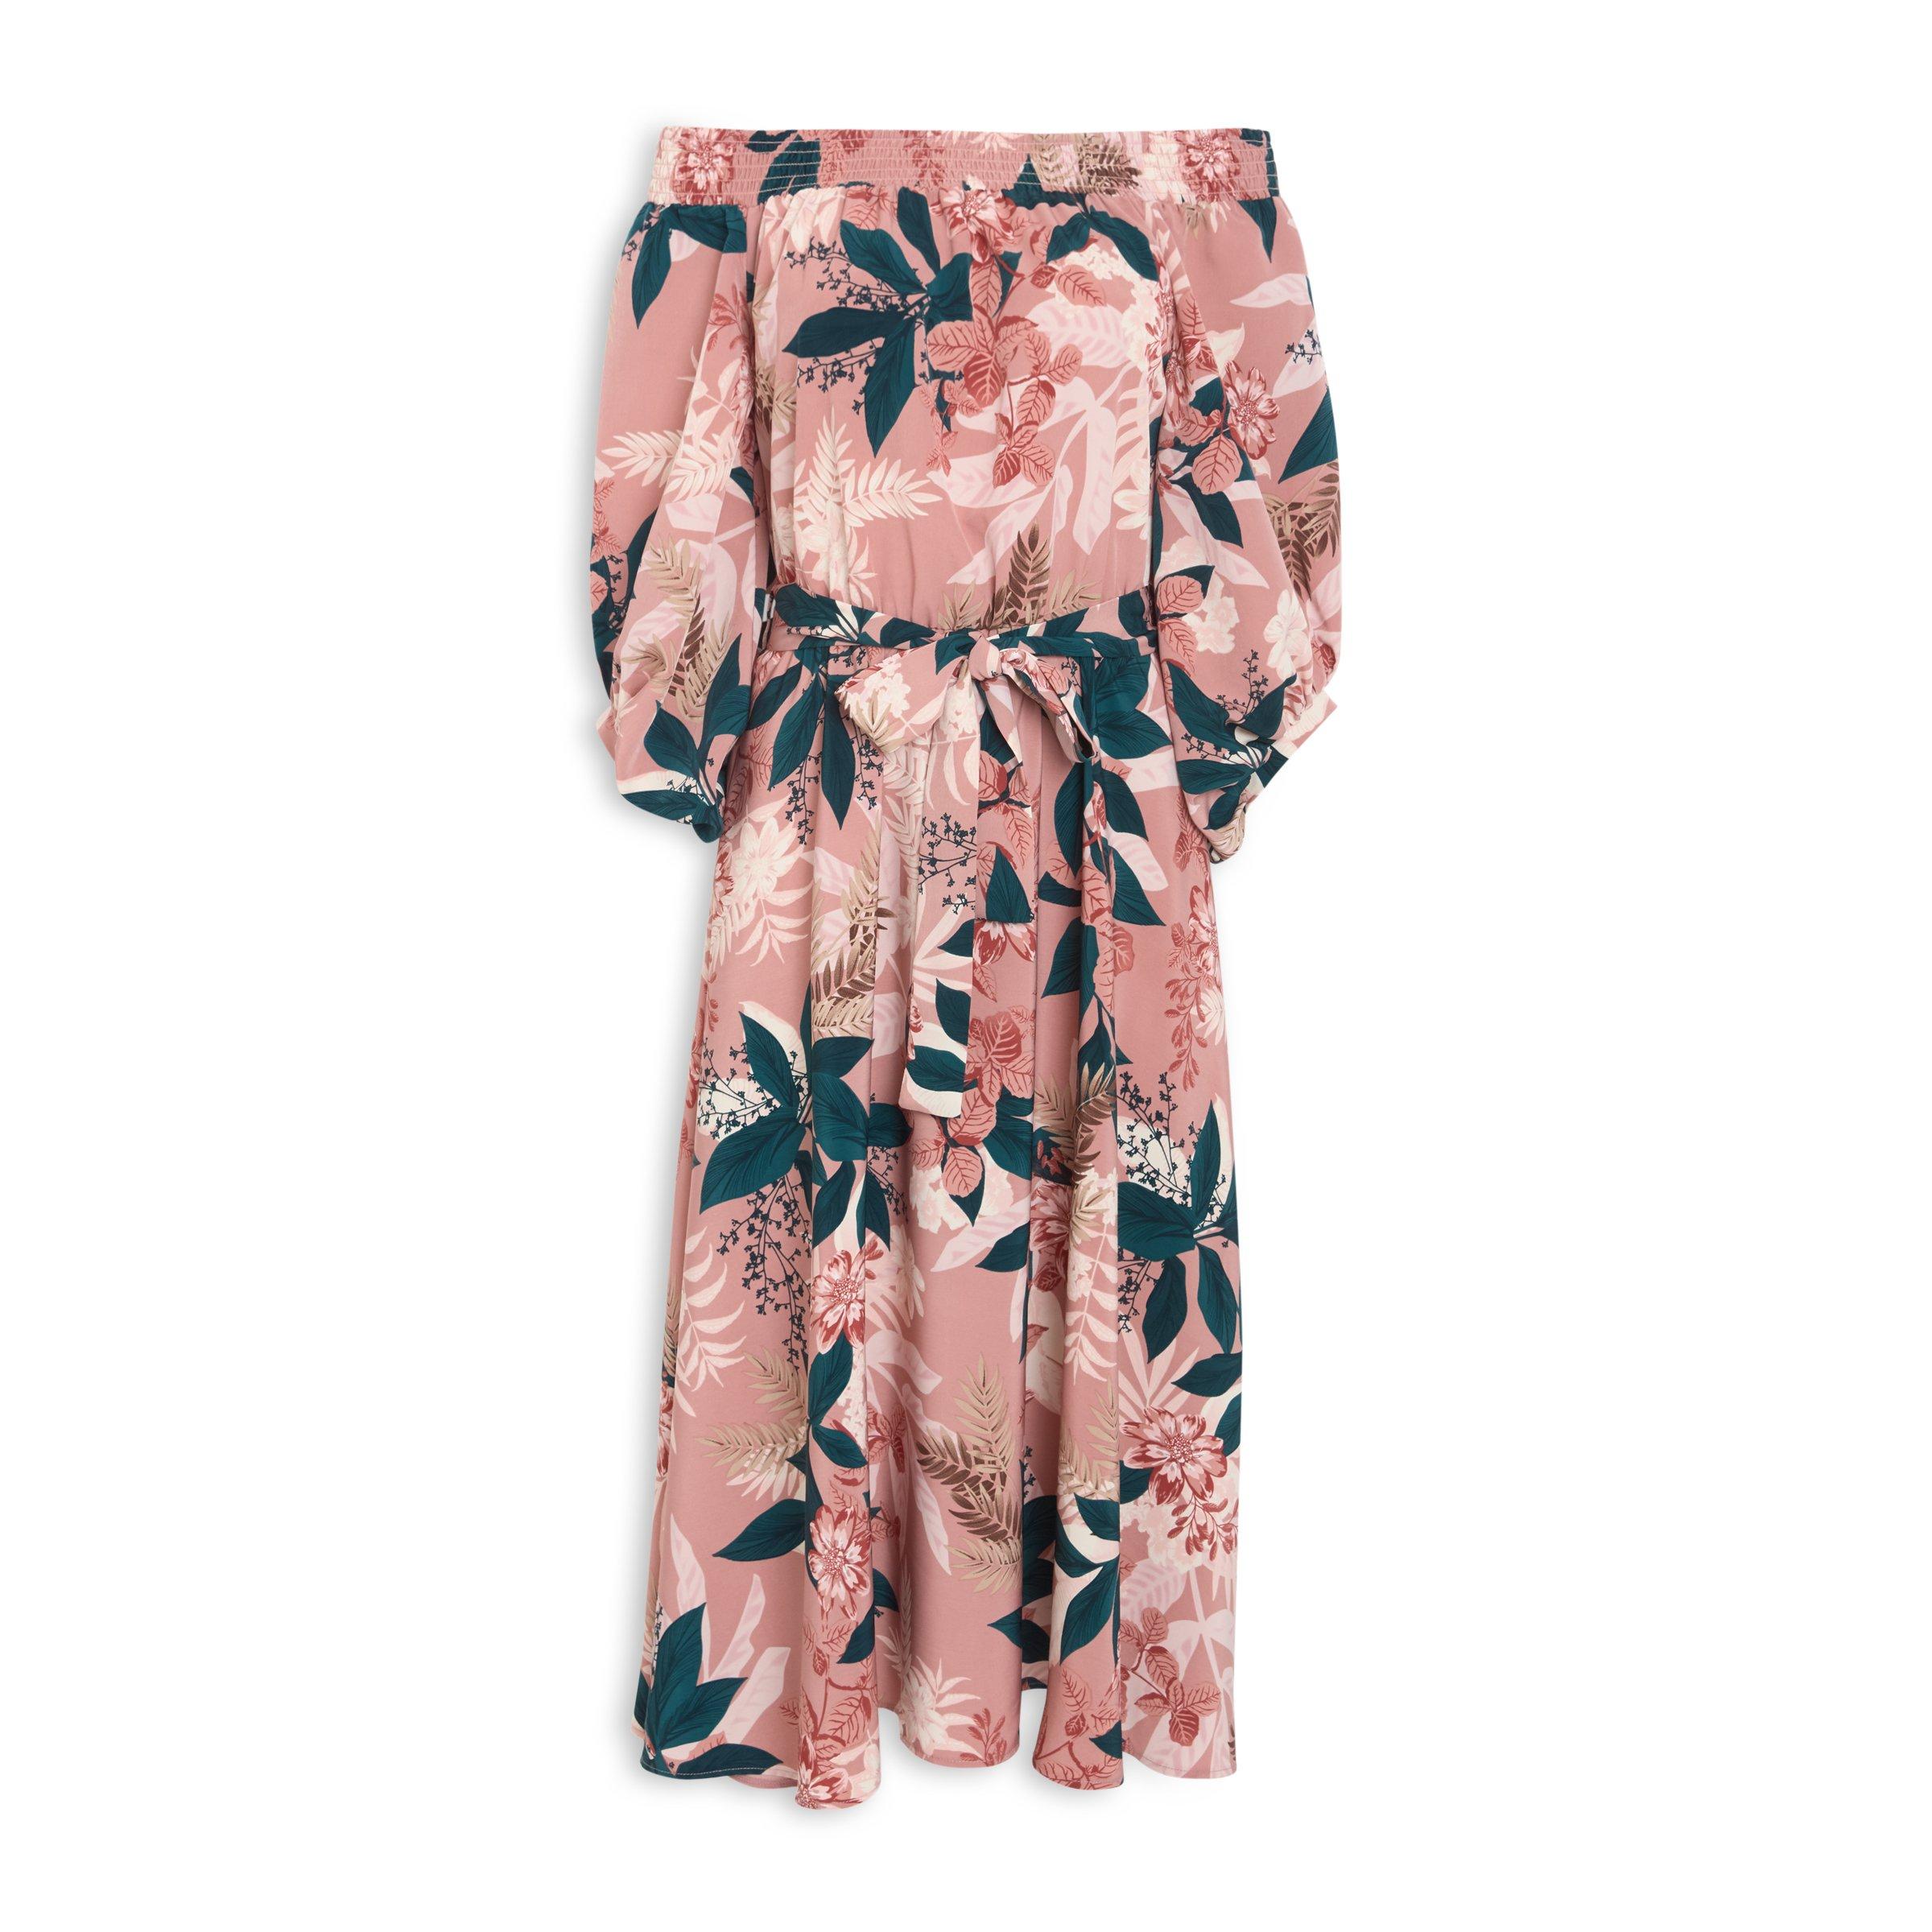 Buy Truworths Floral Printed Dress Online | Truworths